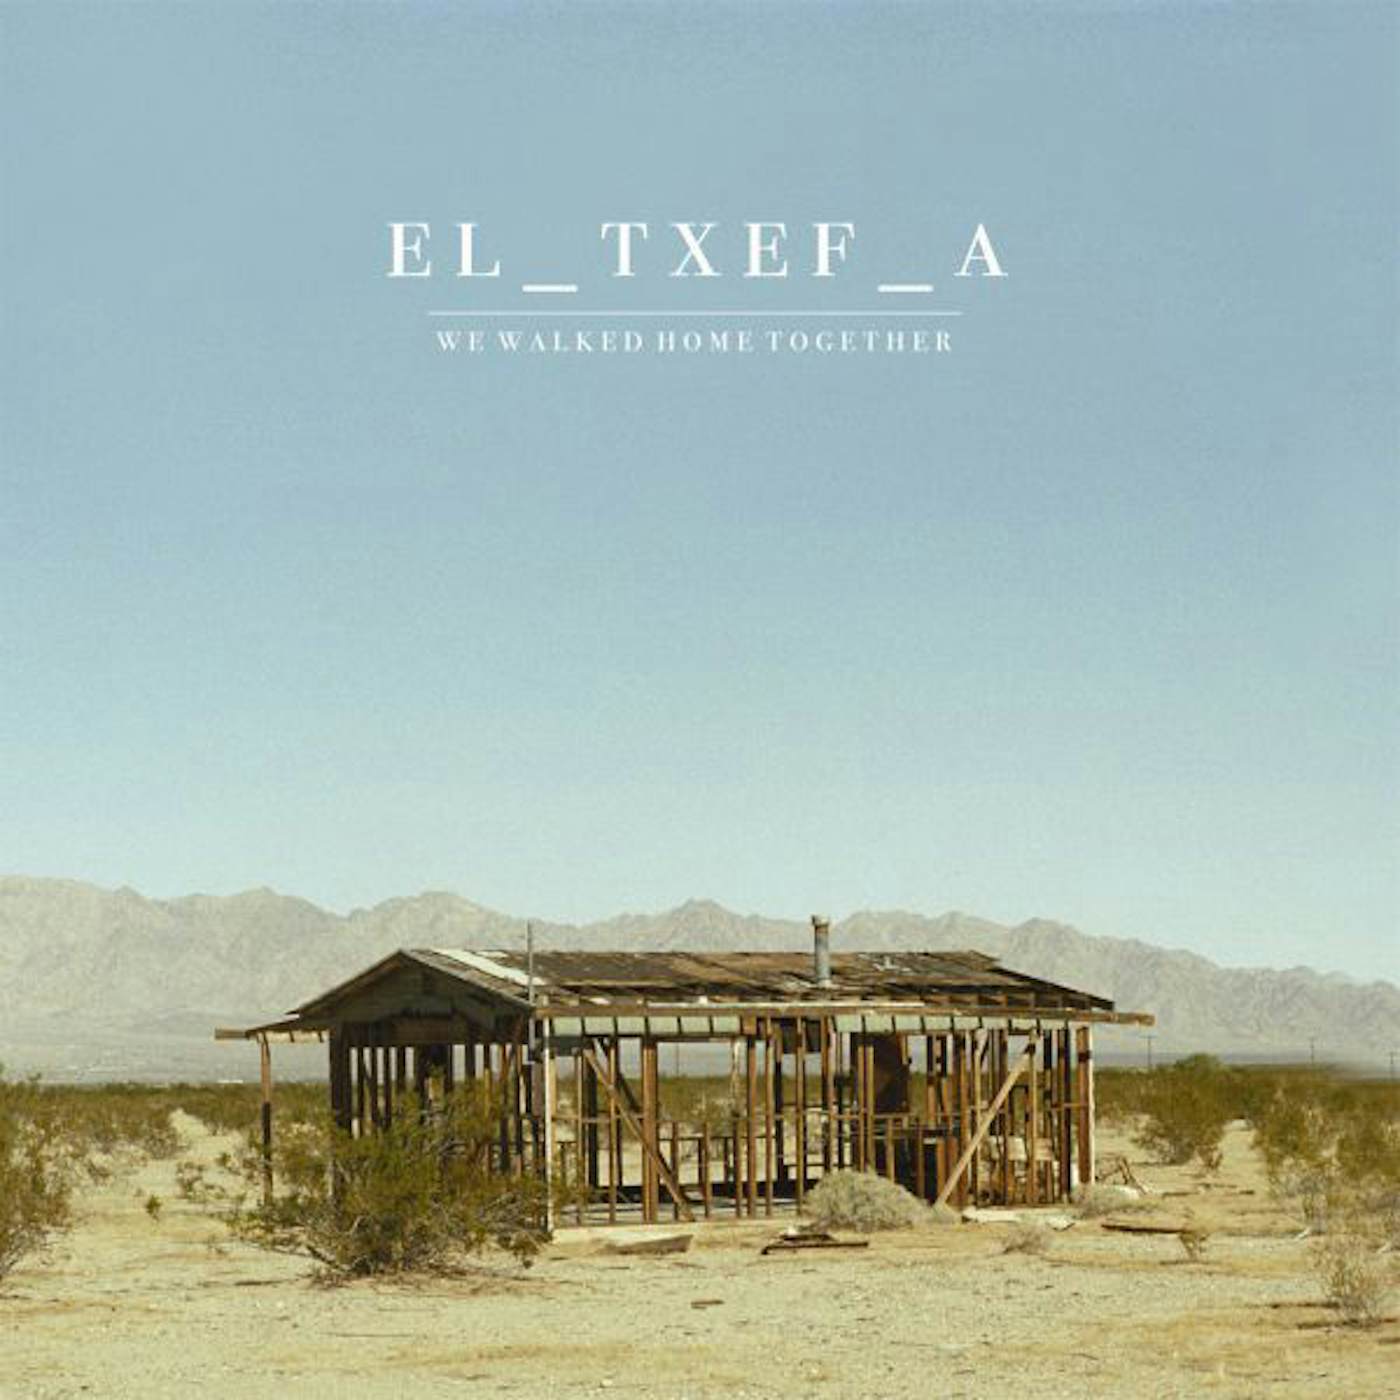 El-Txef-A WE WALKED HOME TOGETHER CD